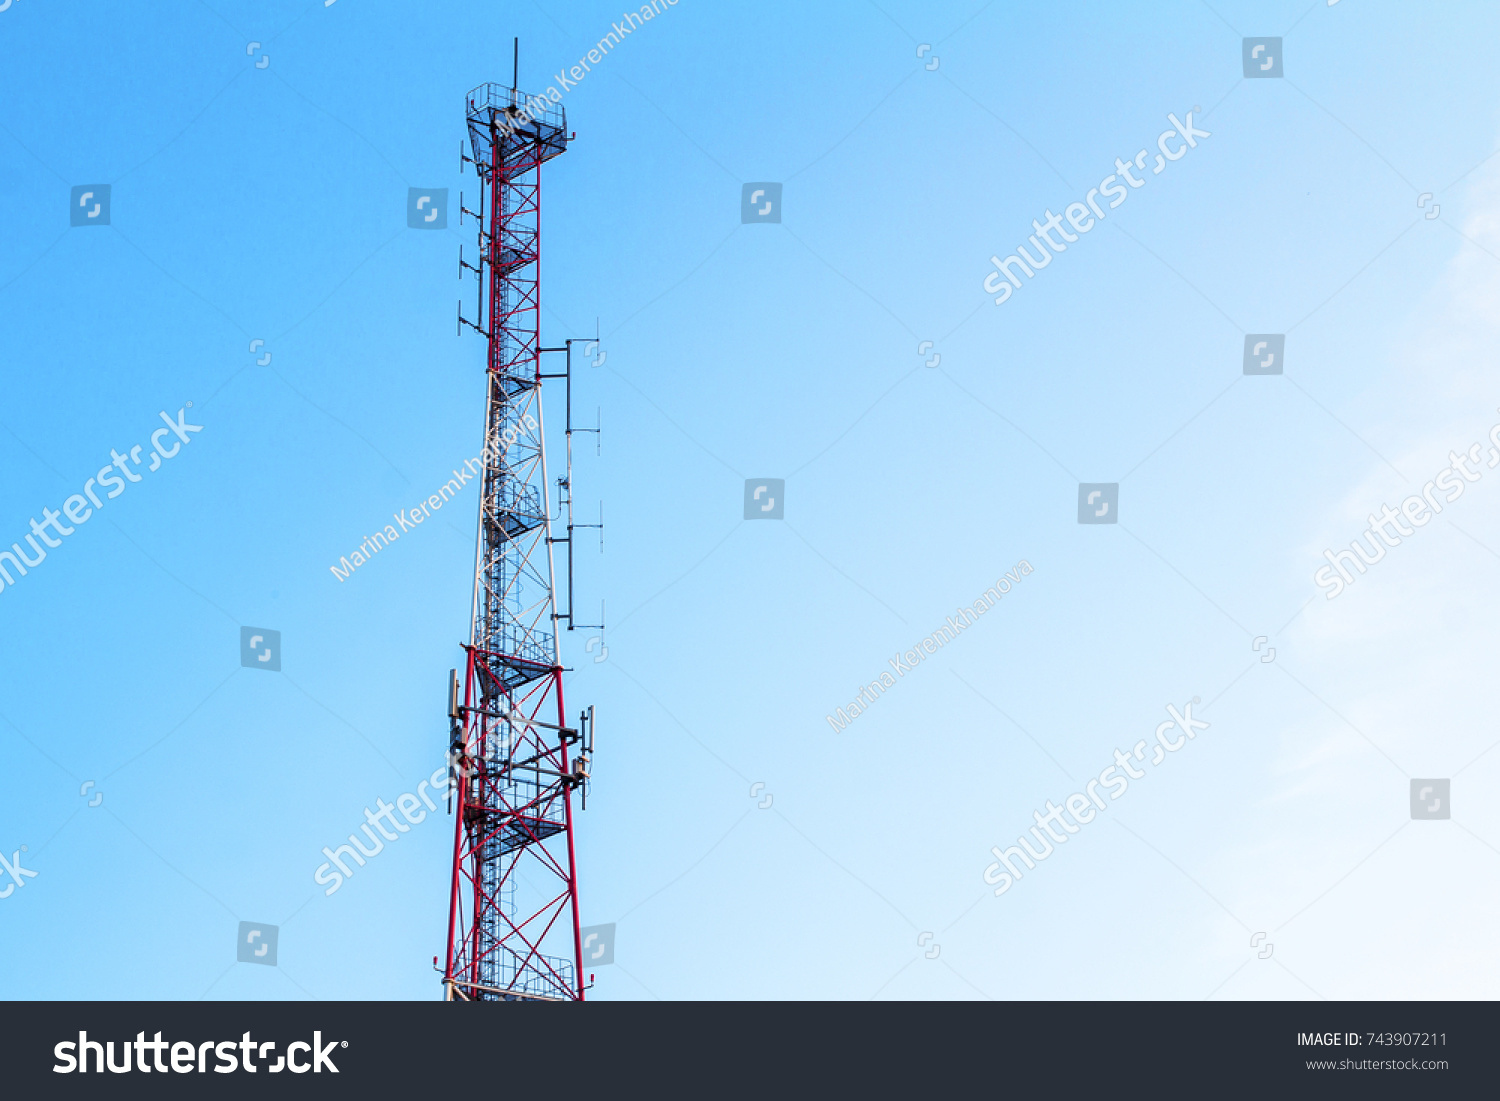  cellular tower design on a blue sky background / cellular tower #743907211